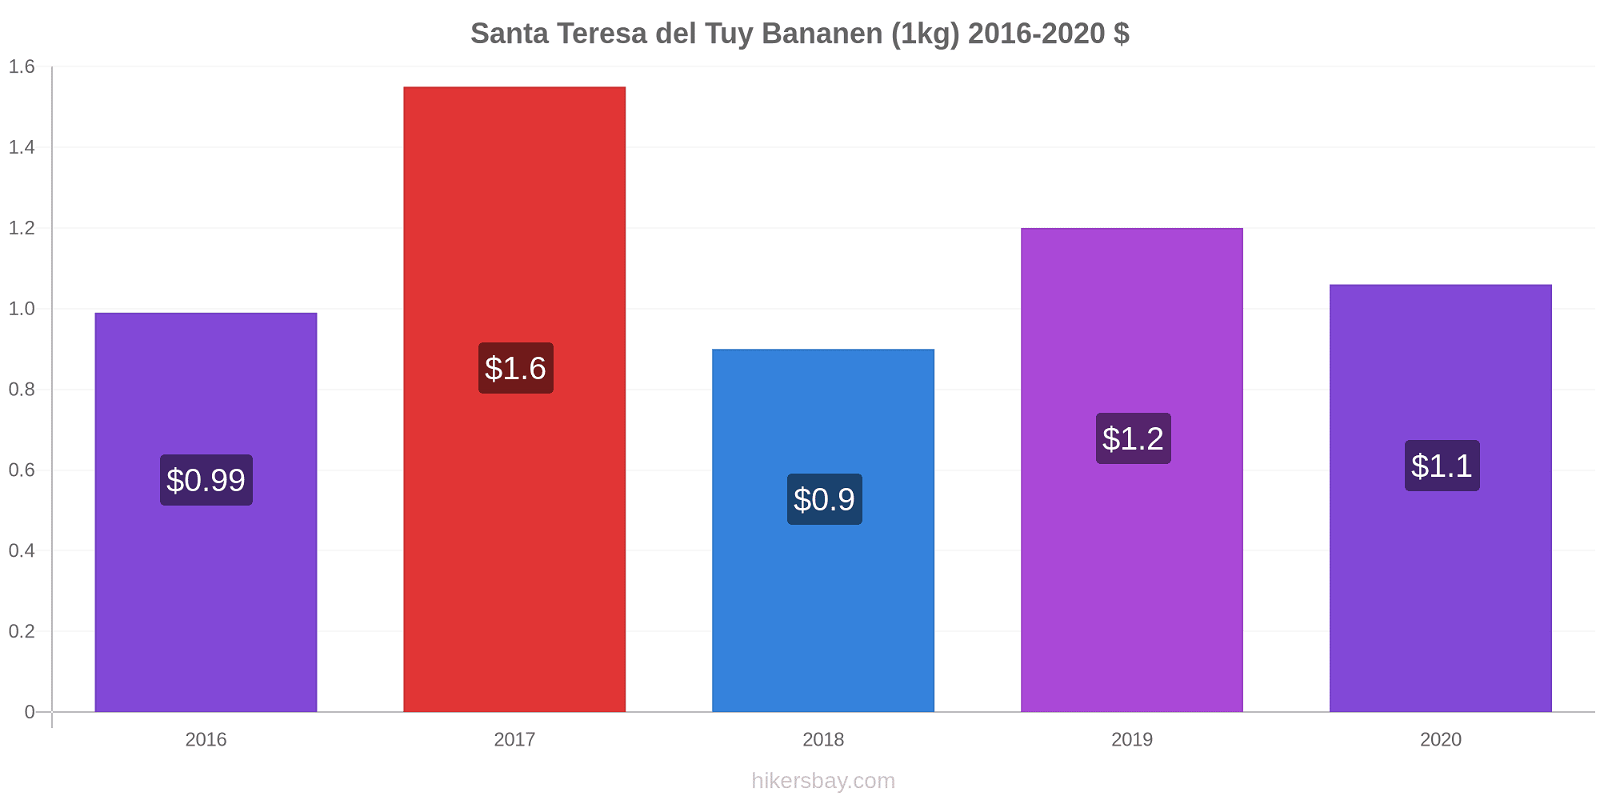 Santa Teresa del Tuy prijswijzigingen Banaan (1kg) hikersbay.com